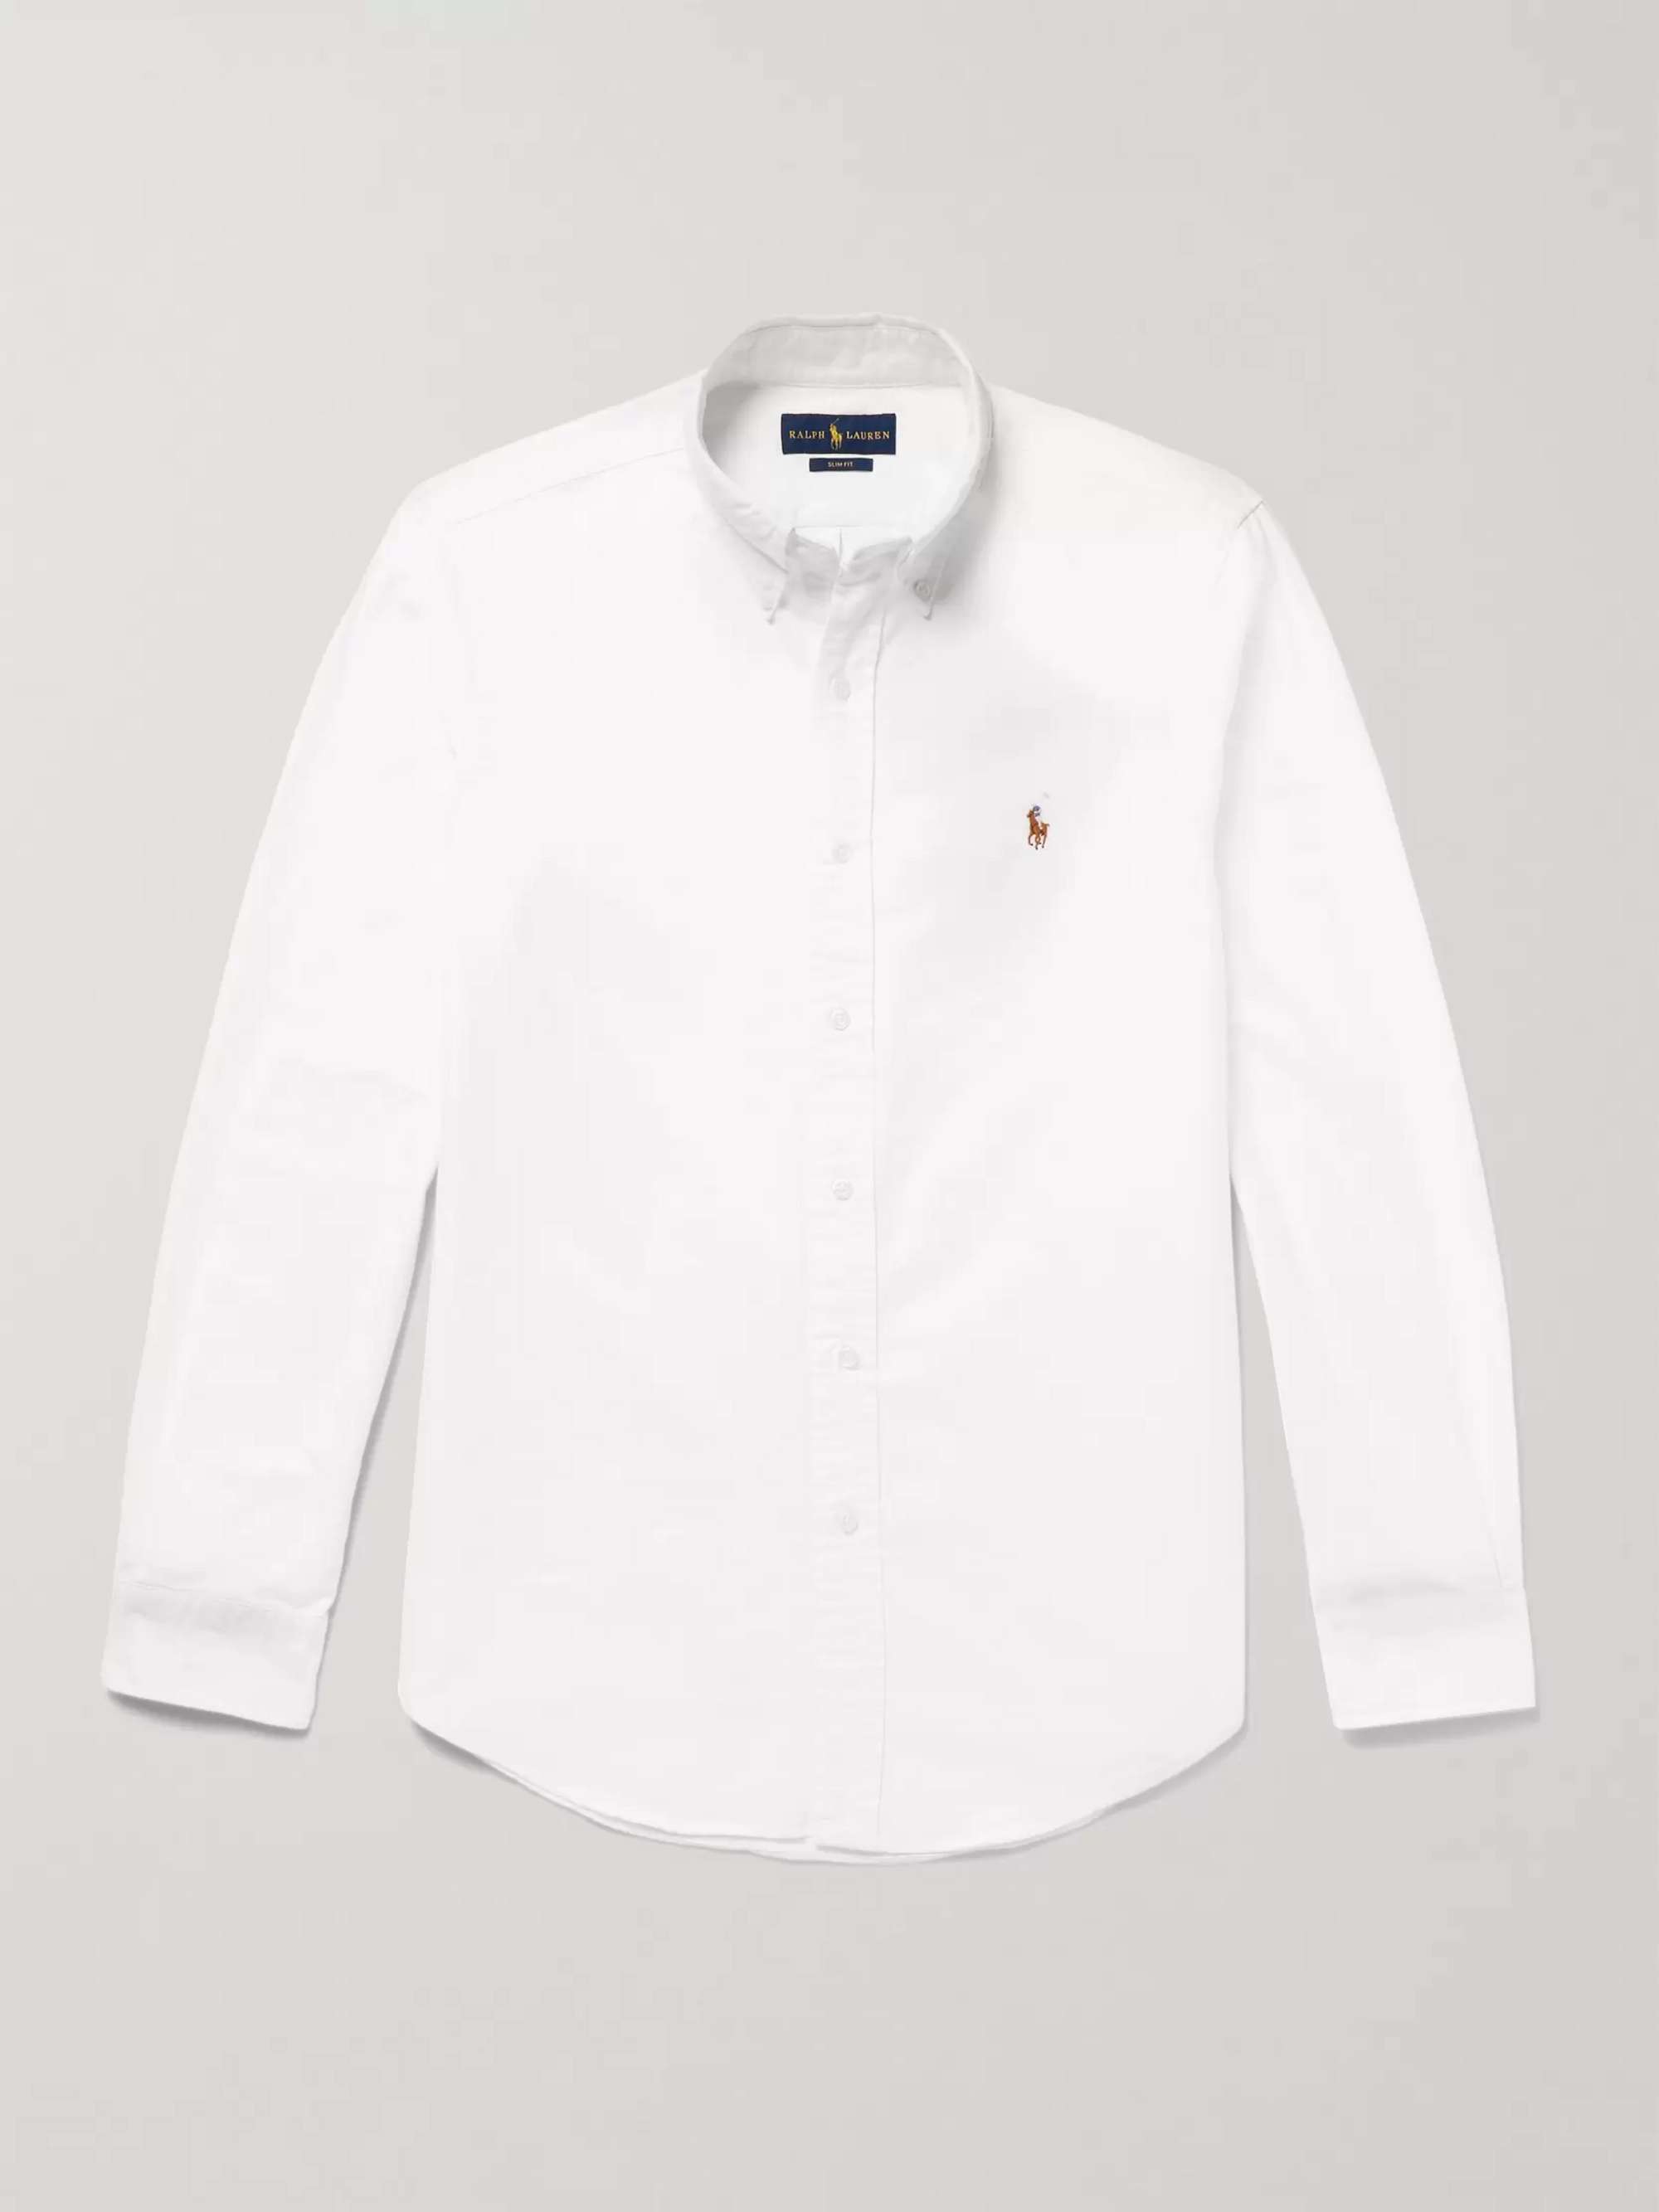 Graph Underline packet White Slim-Fit Cotton Oxford Shirt | POLO RALPH LAUREN | MR PORTER